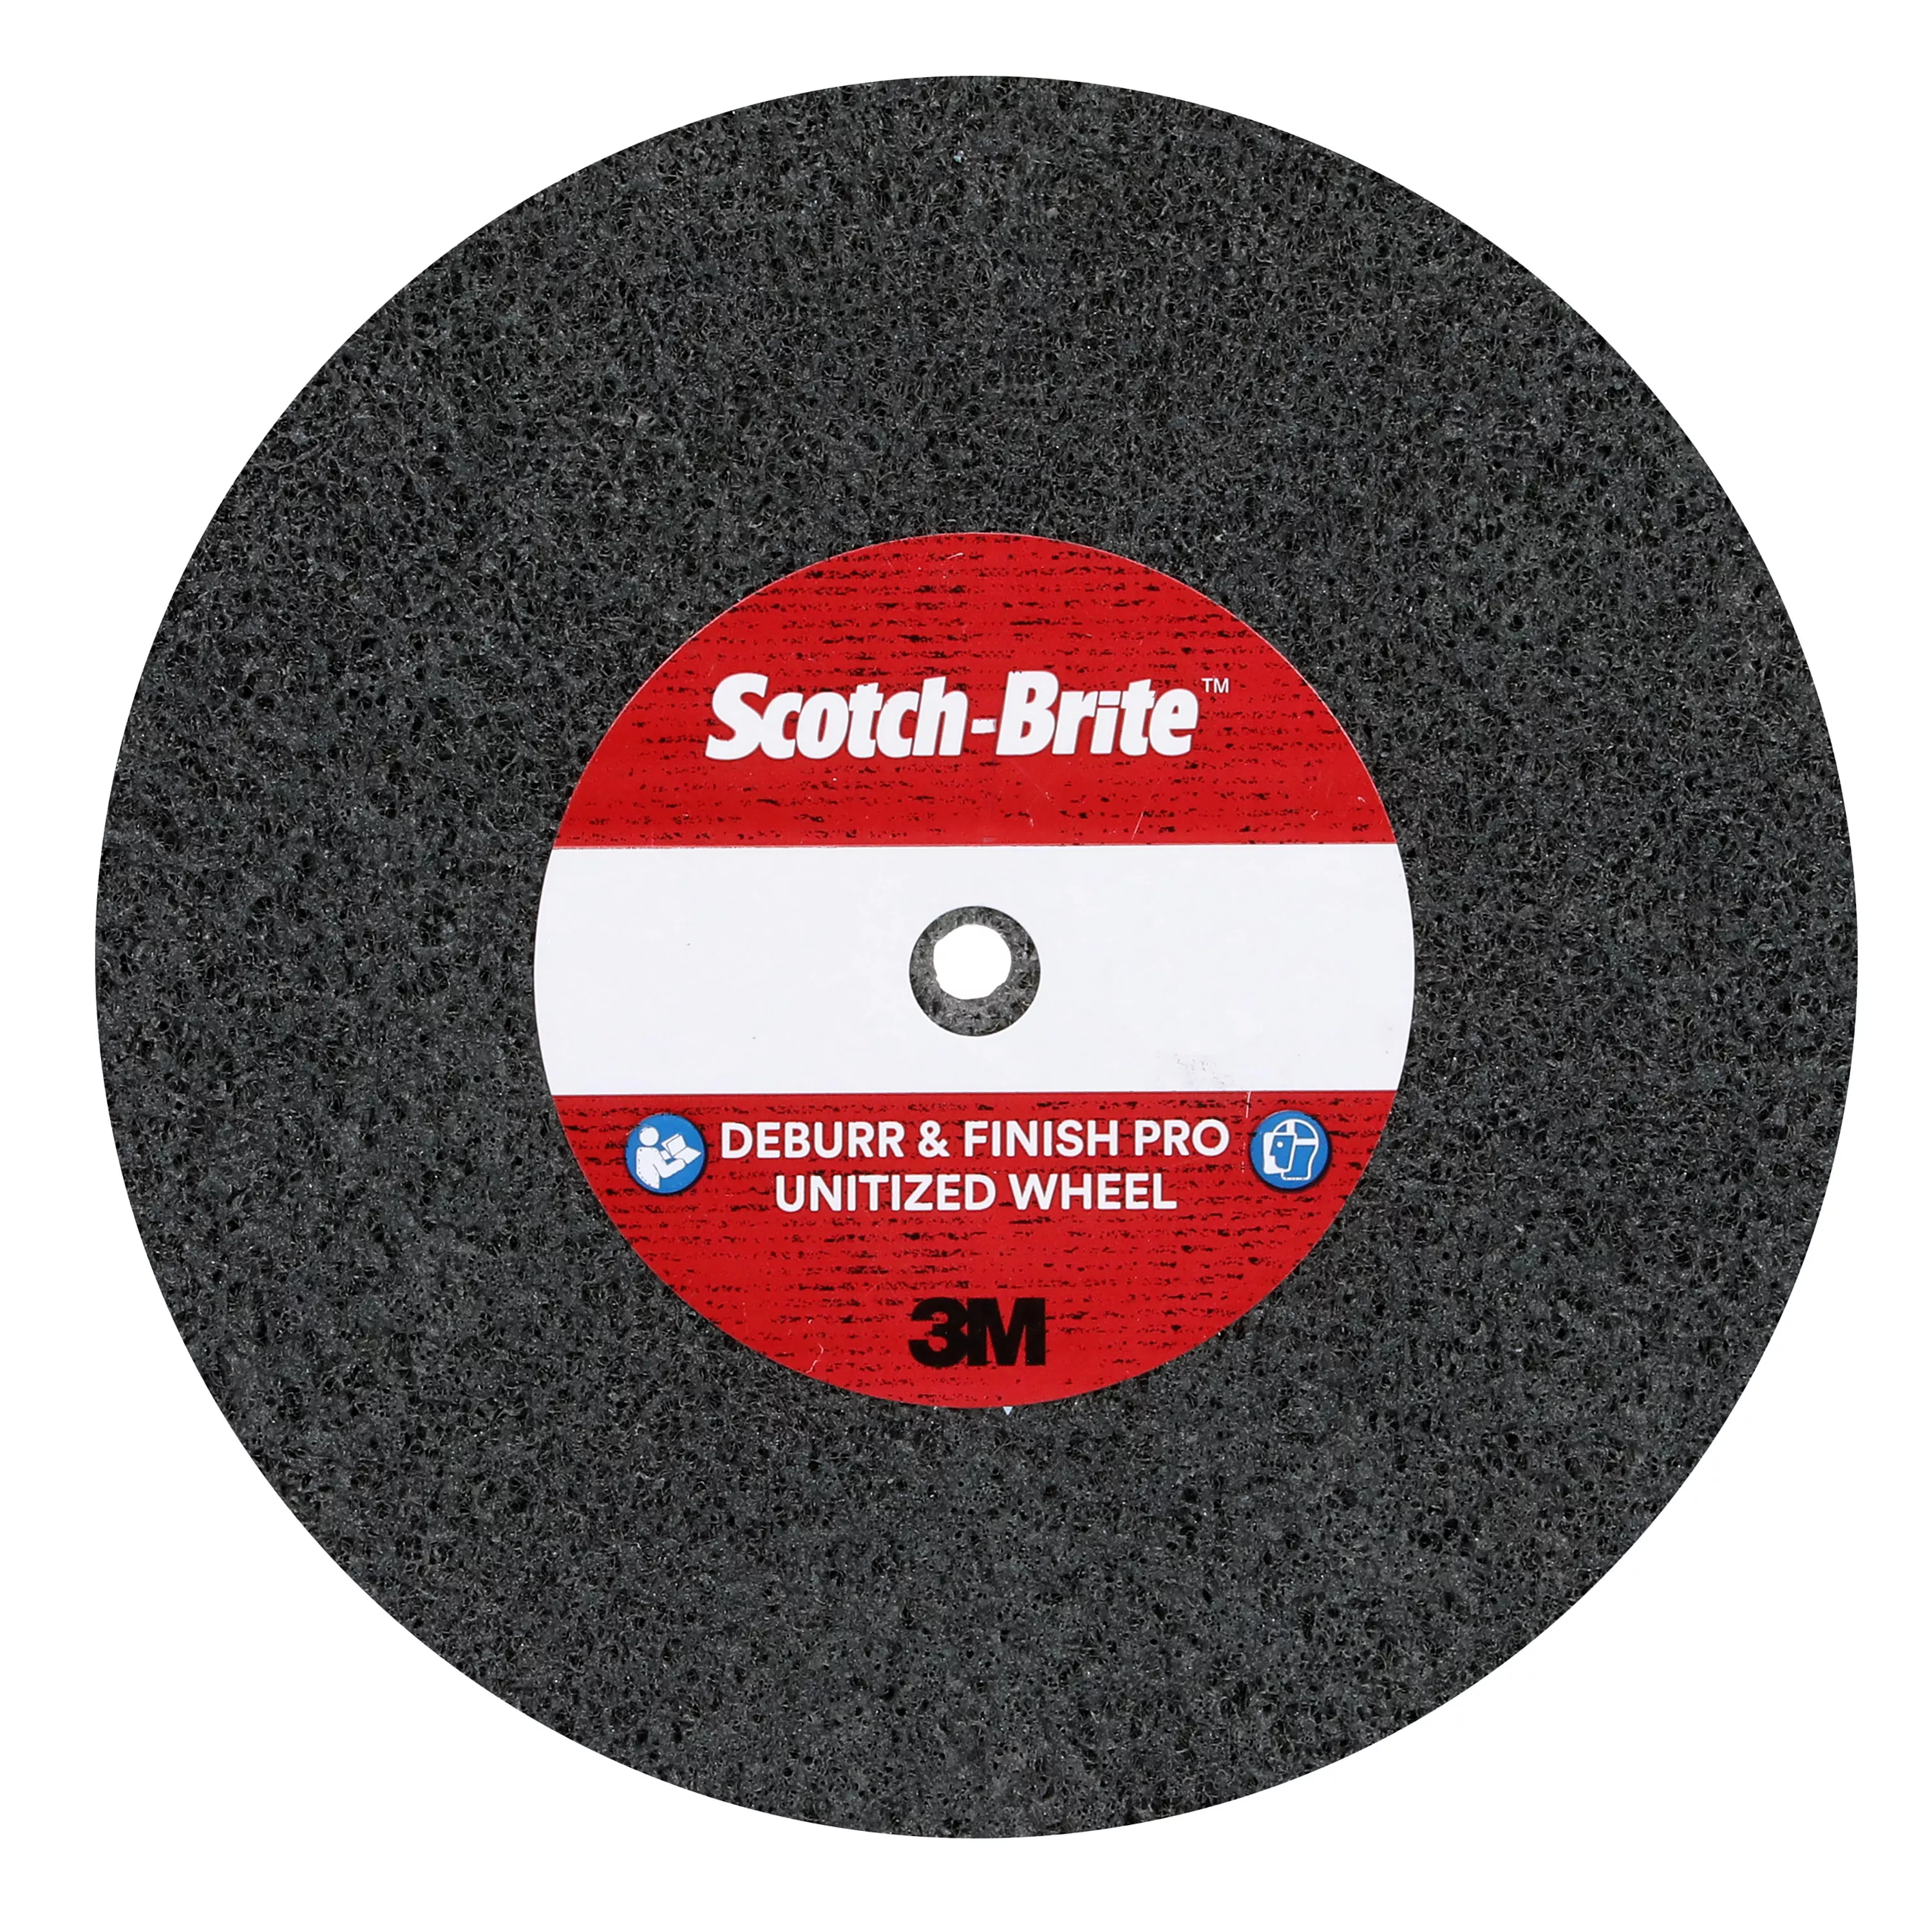 SKU 7100143467 | Scotch-Brite™ Deburr & Finish Pro Unitized Wheel